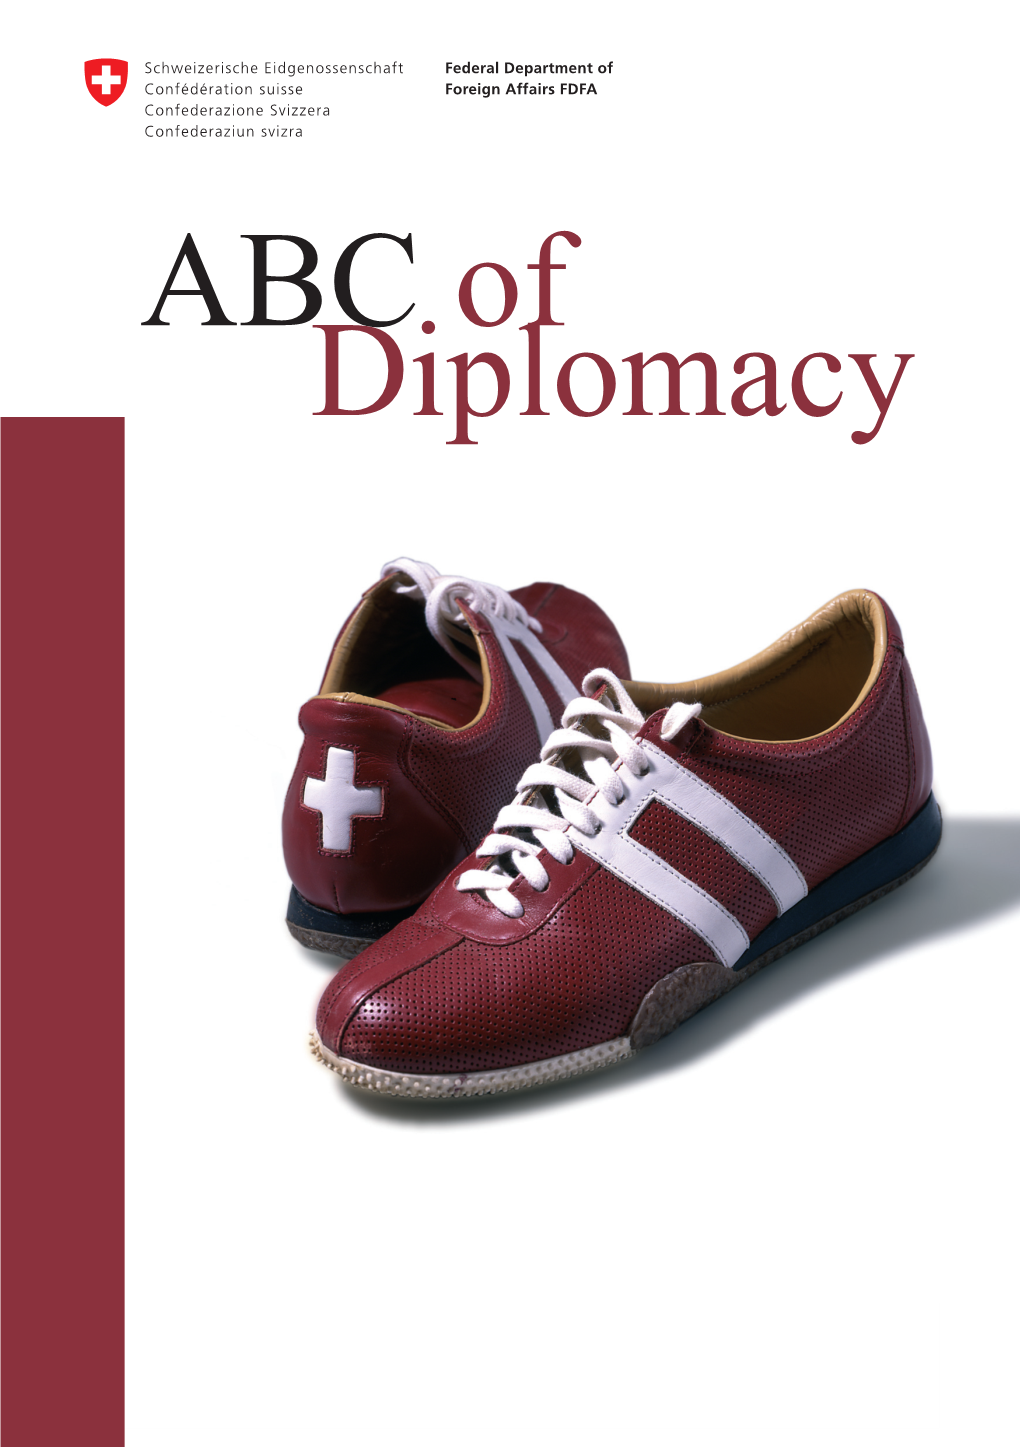 ABC of Diplomacy